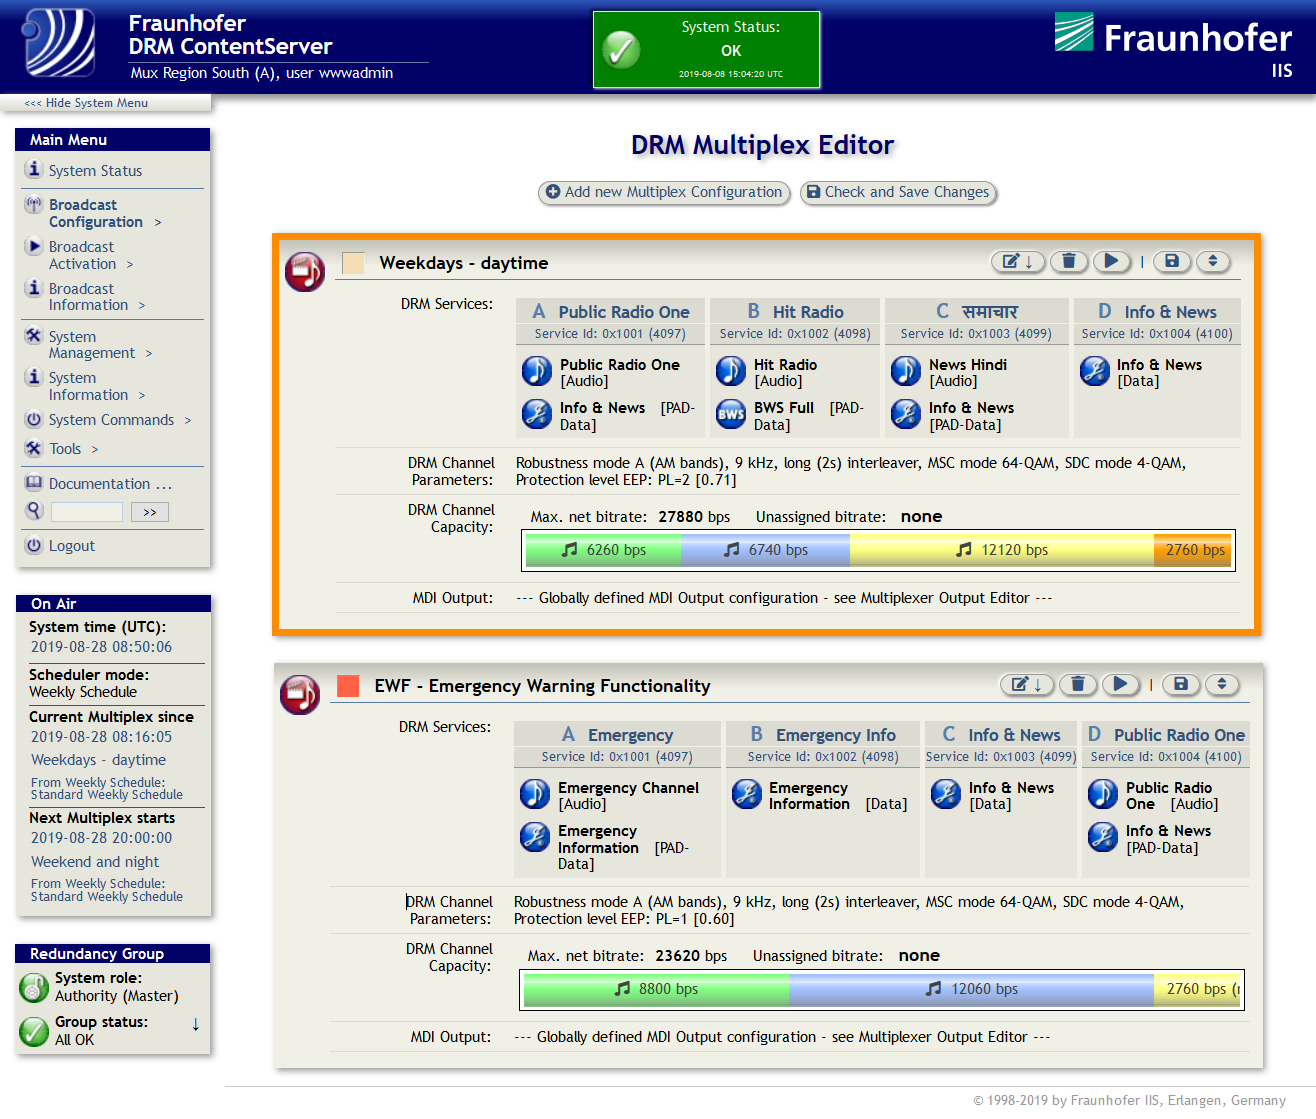 Fraunhofer DRM ContentServer Multiplex Editor